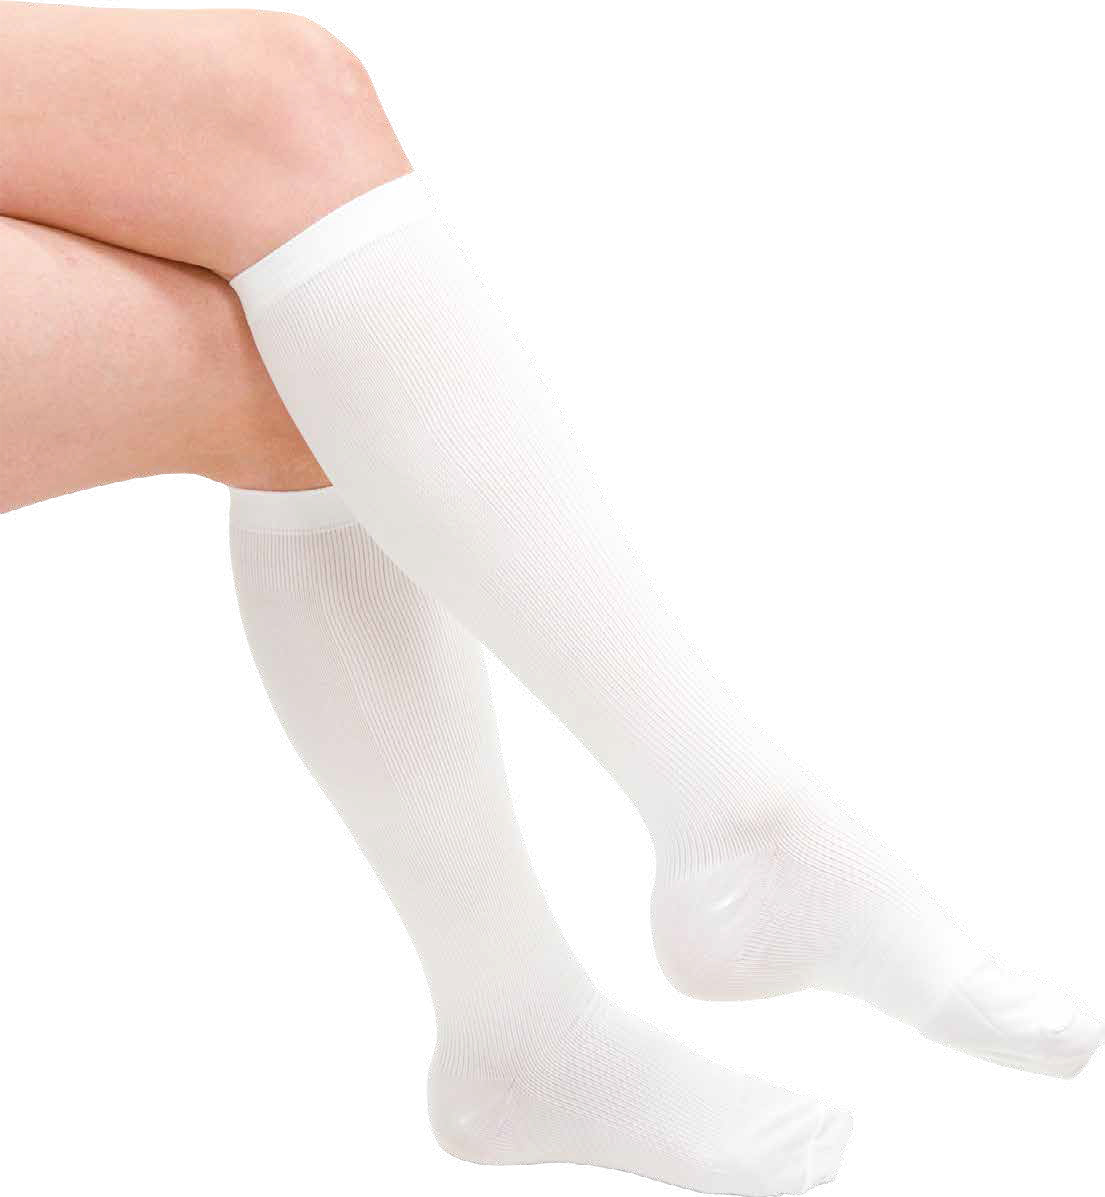 Compression Stockings, Compression Socks